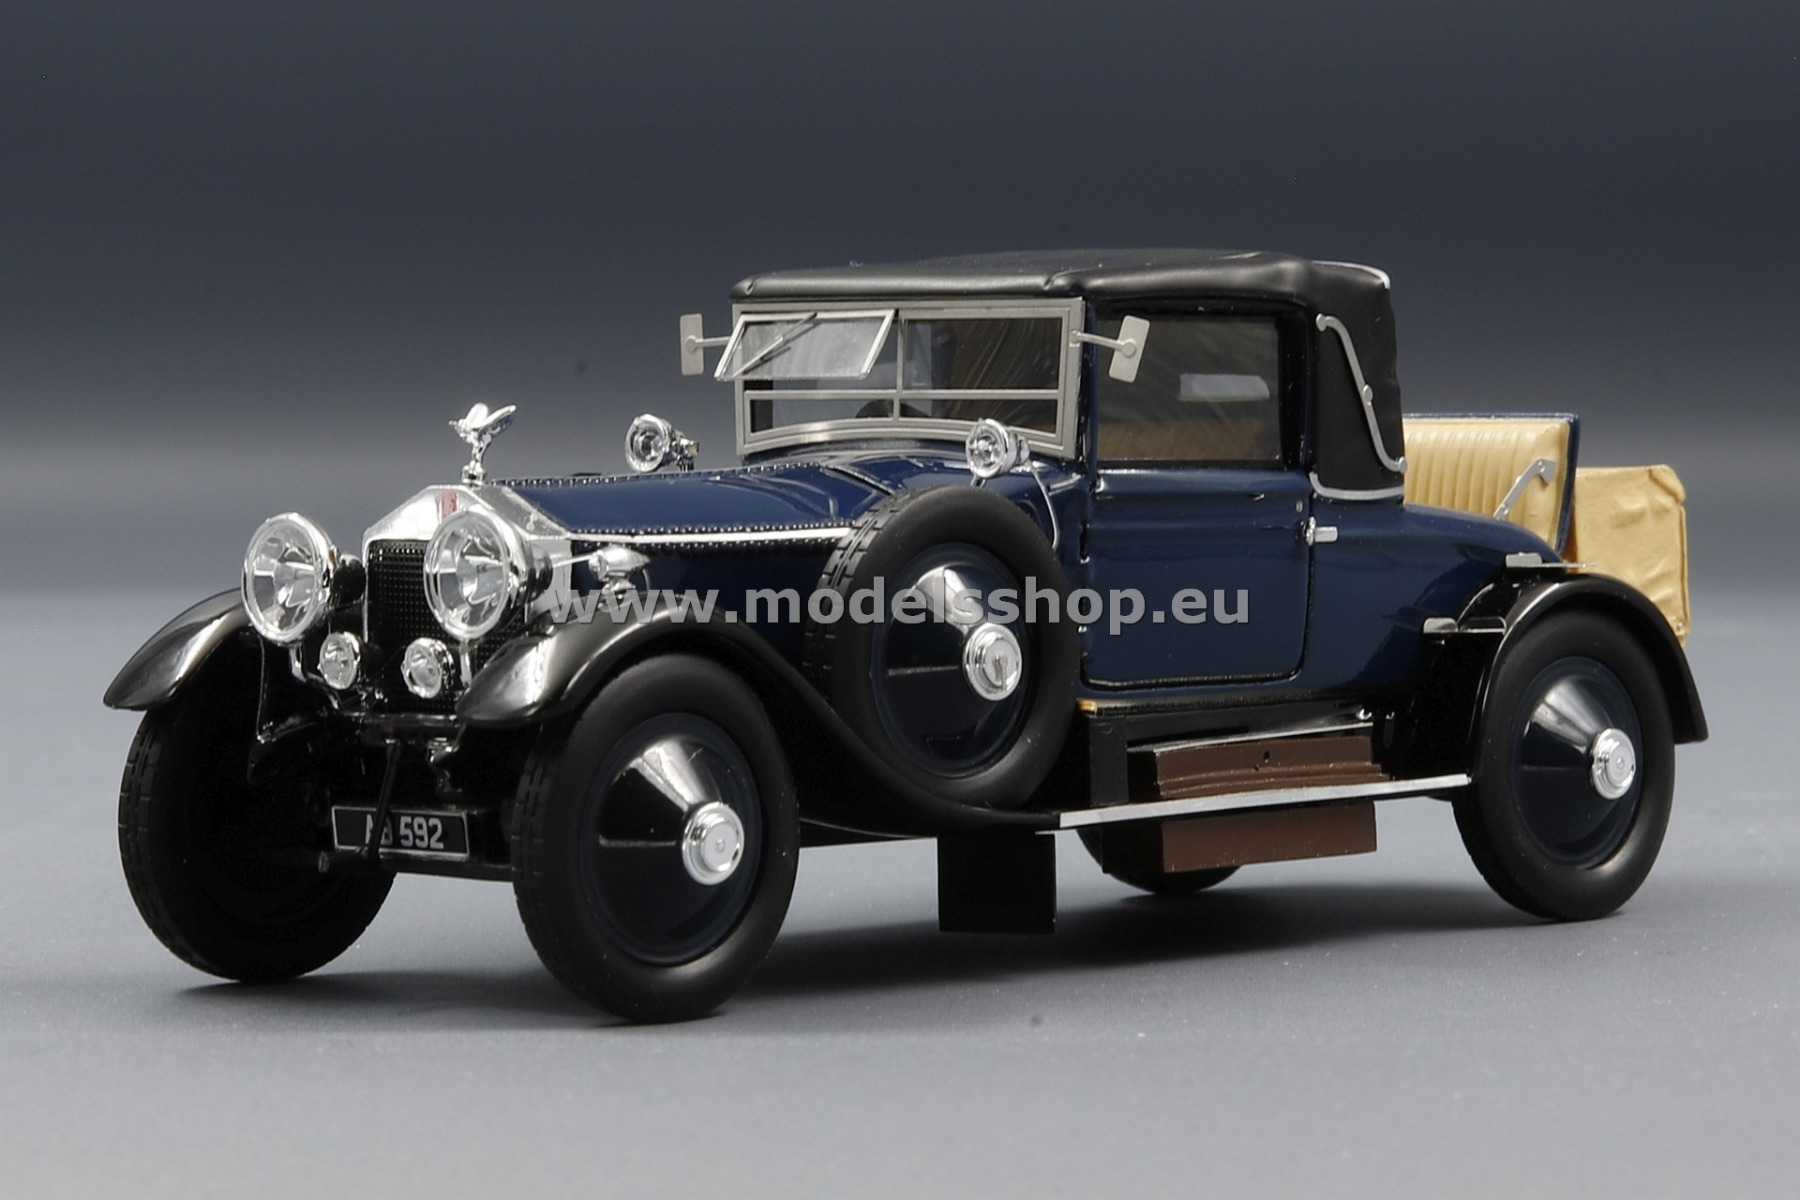 NEO 49592 Rolls-Royce Silver Ghost Doctors Coupe, 1920 /dark blue - black/